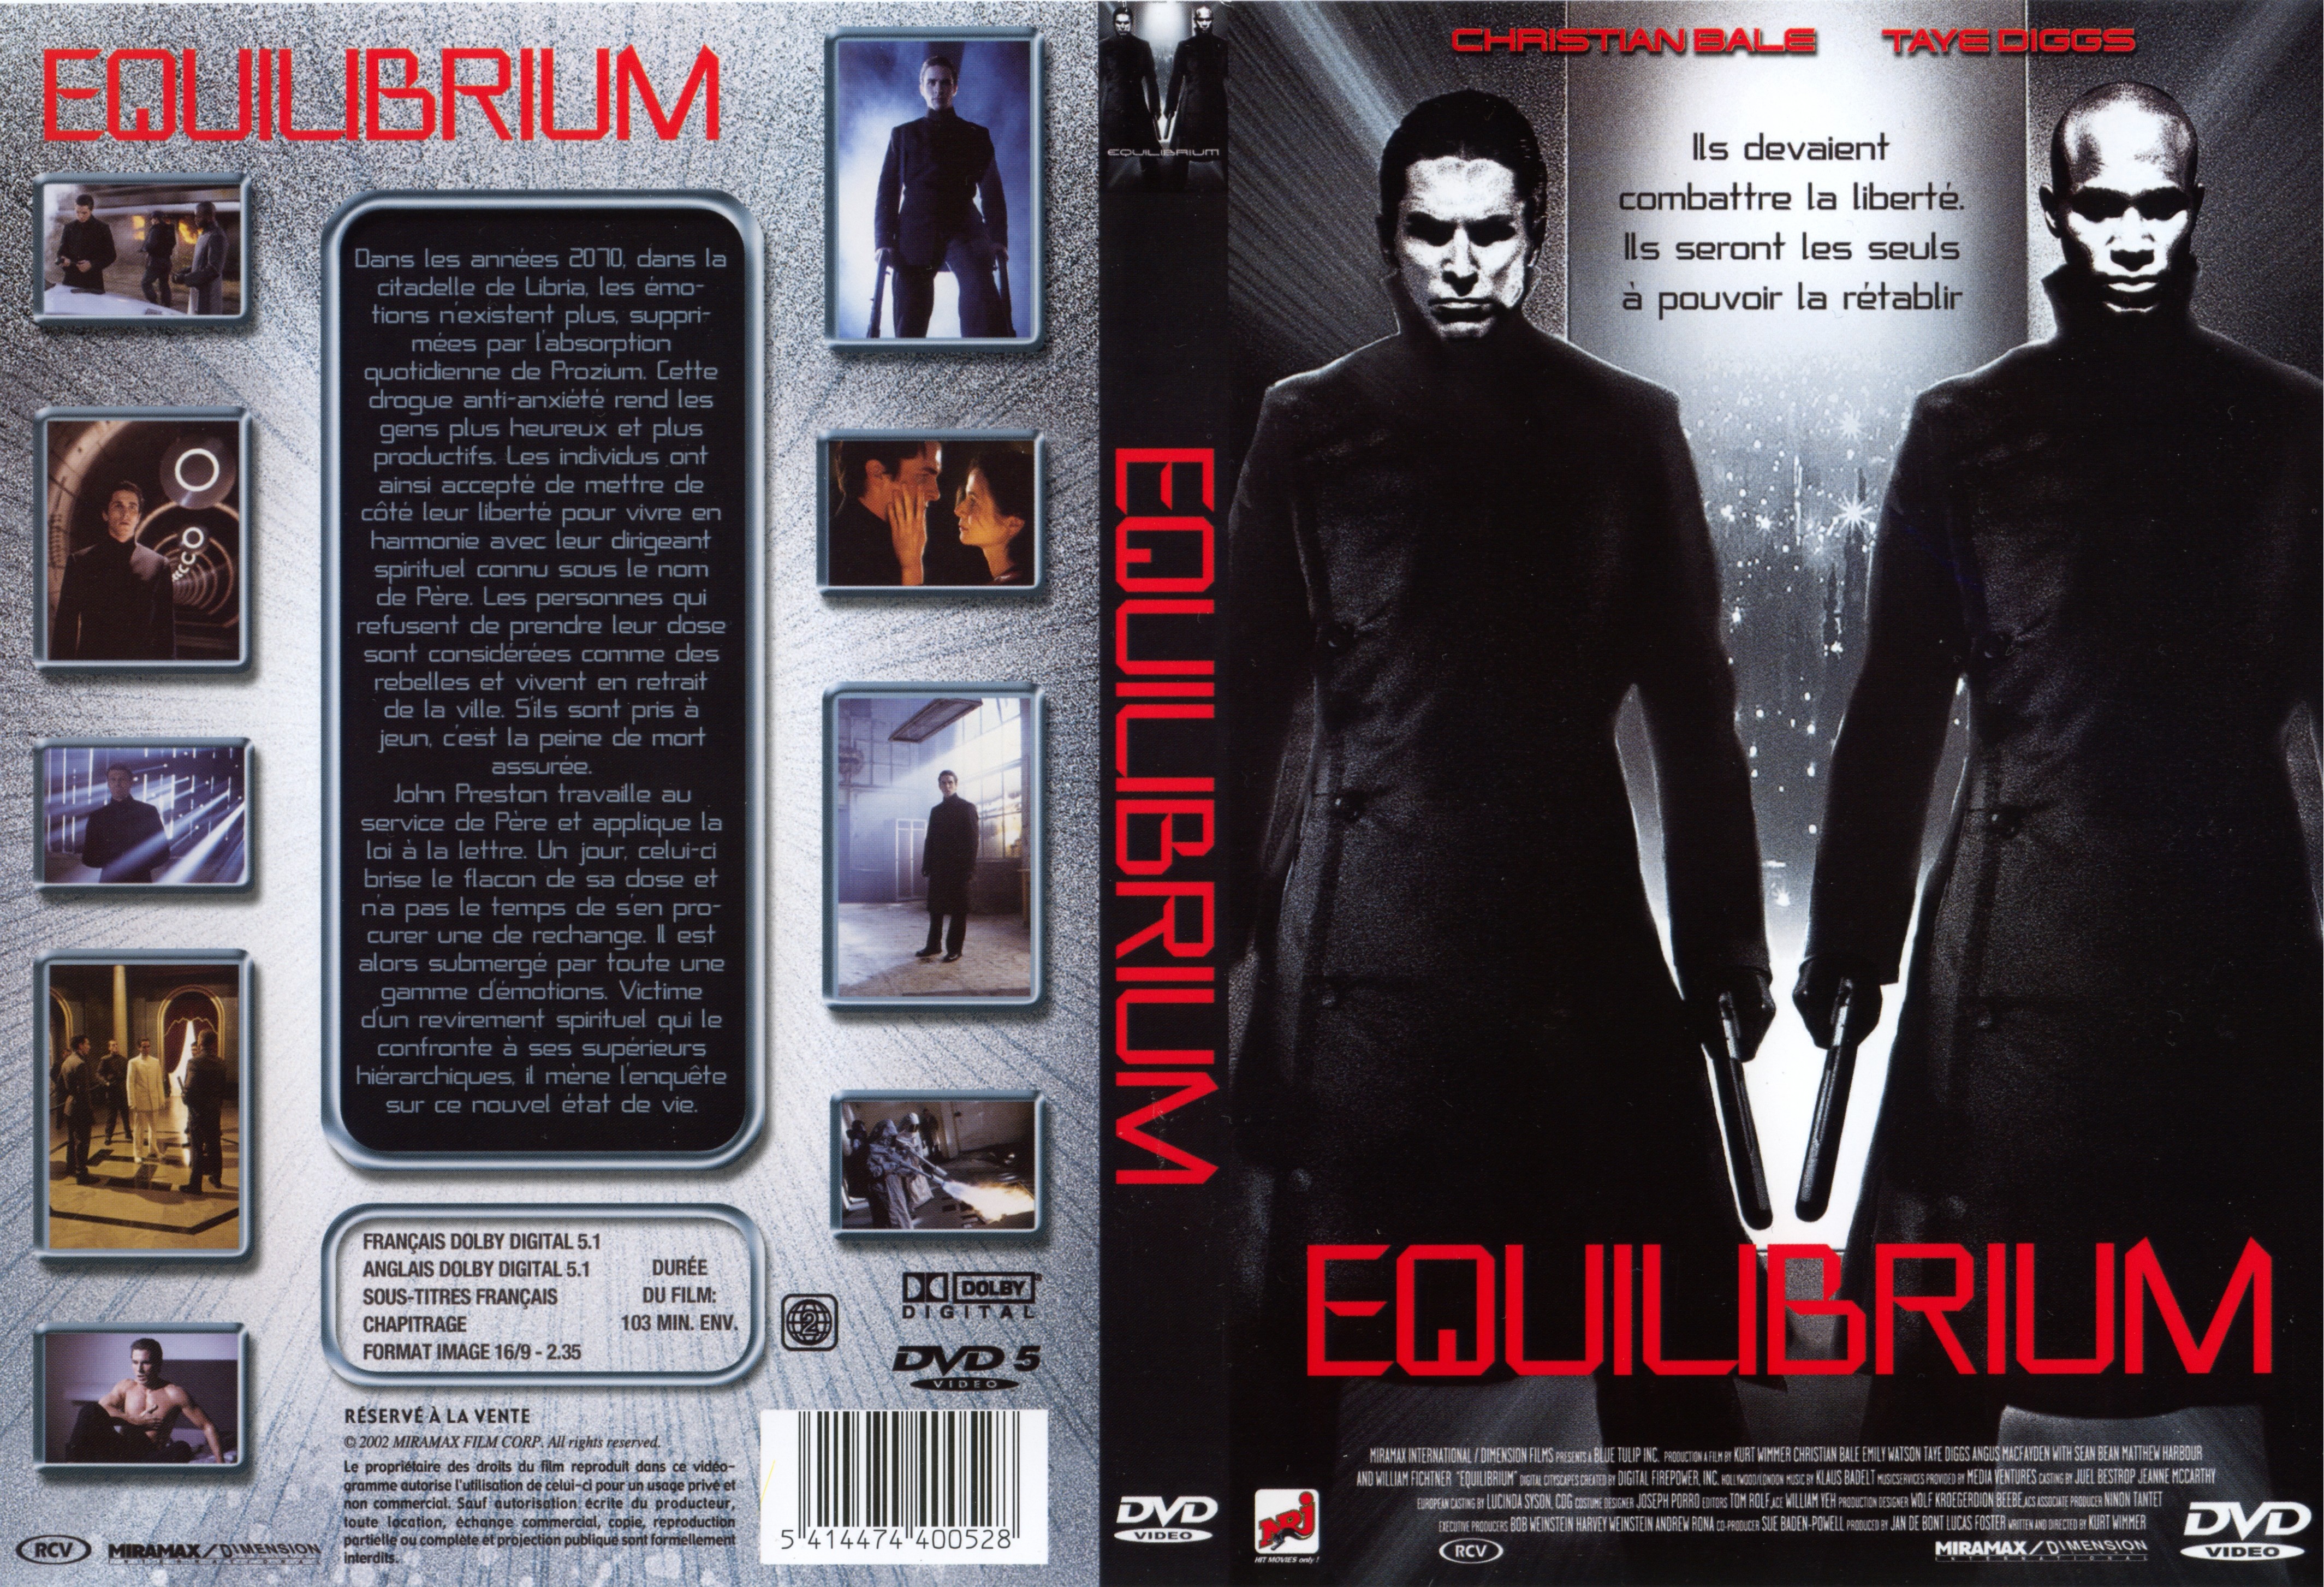 Jaquette DVD Equilibrium v2